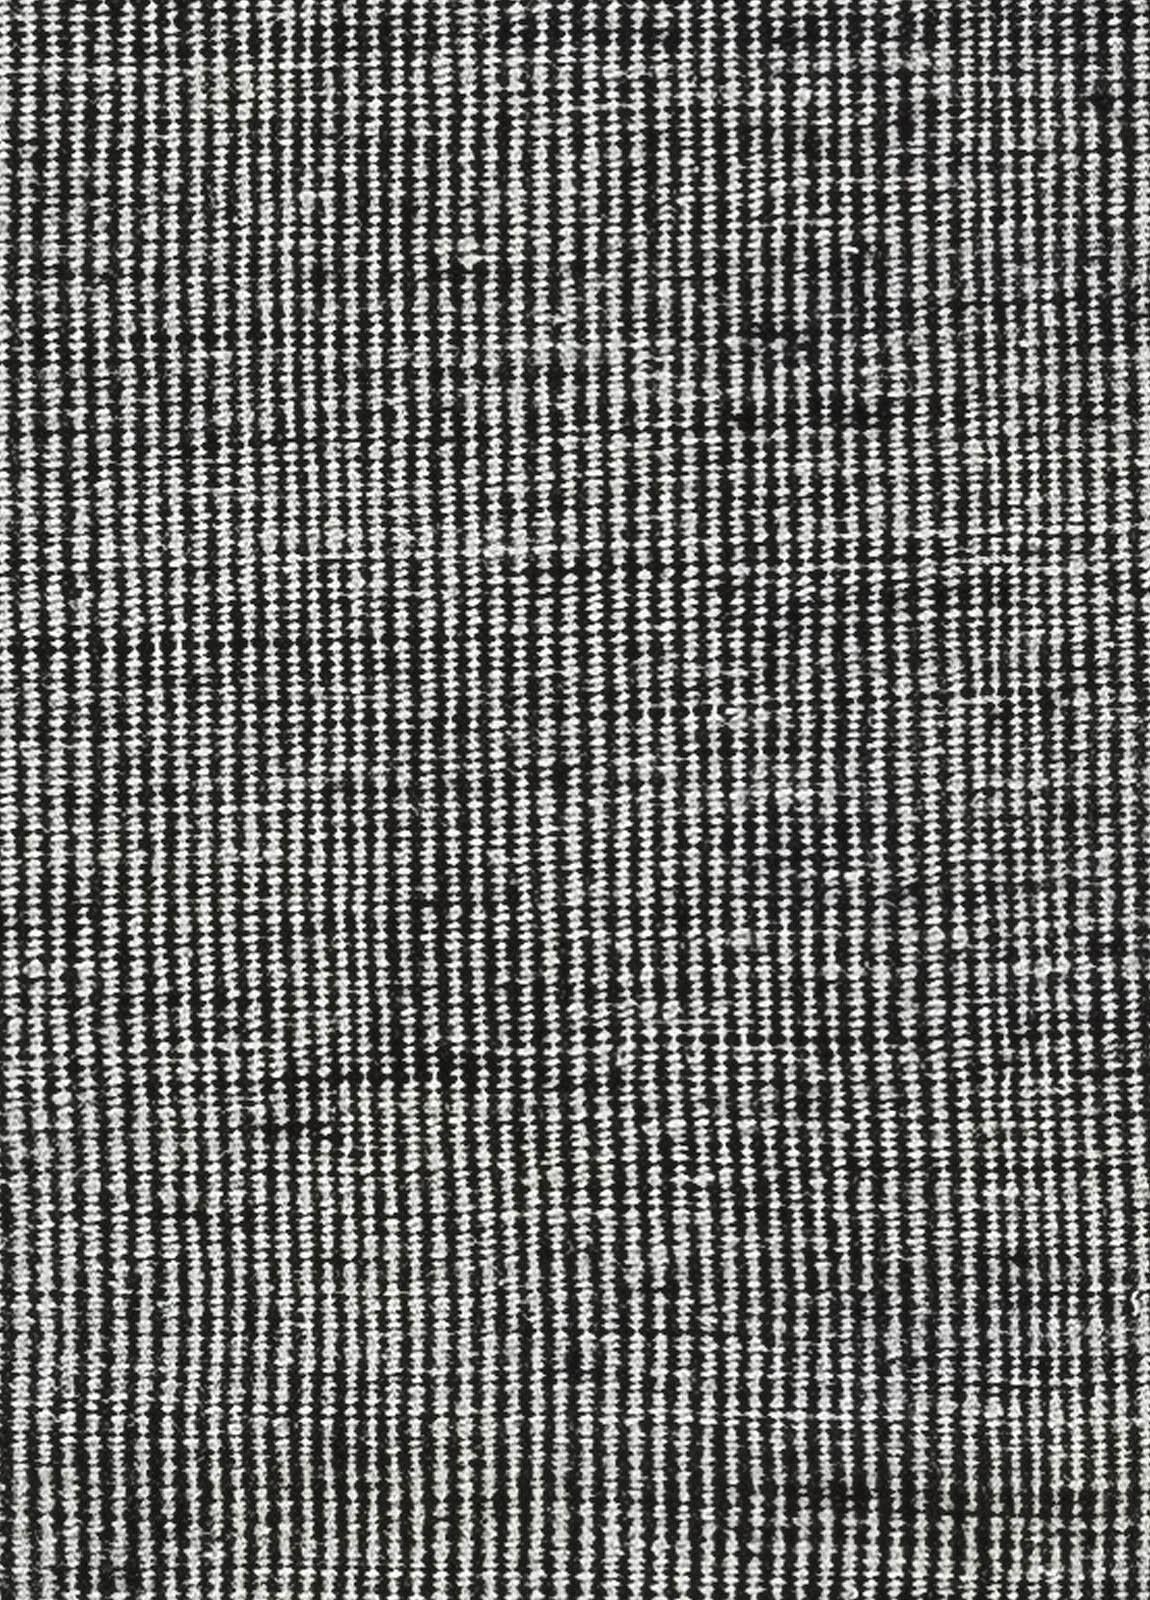 Modern black and white flat weave wool runner by Doris Leslie Blau.
Size: 2'1